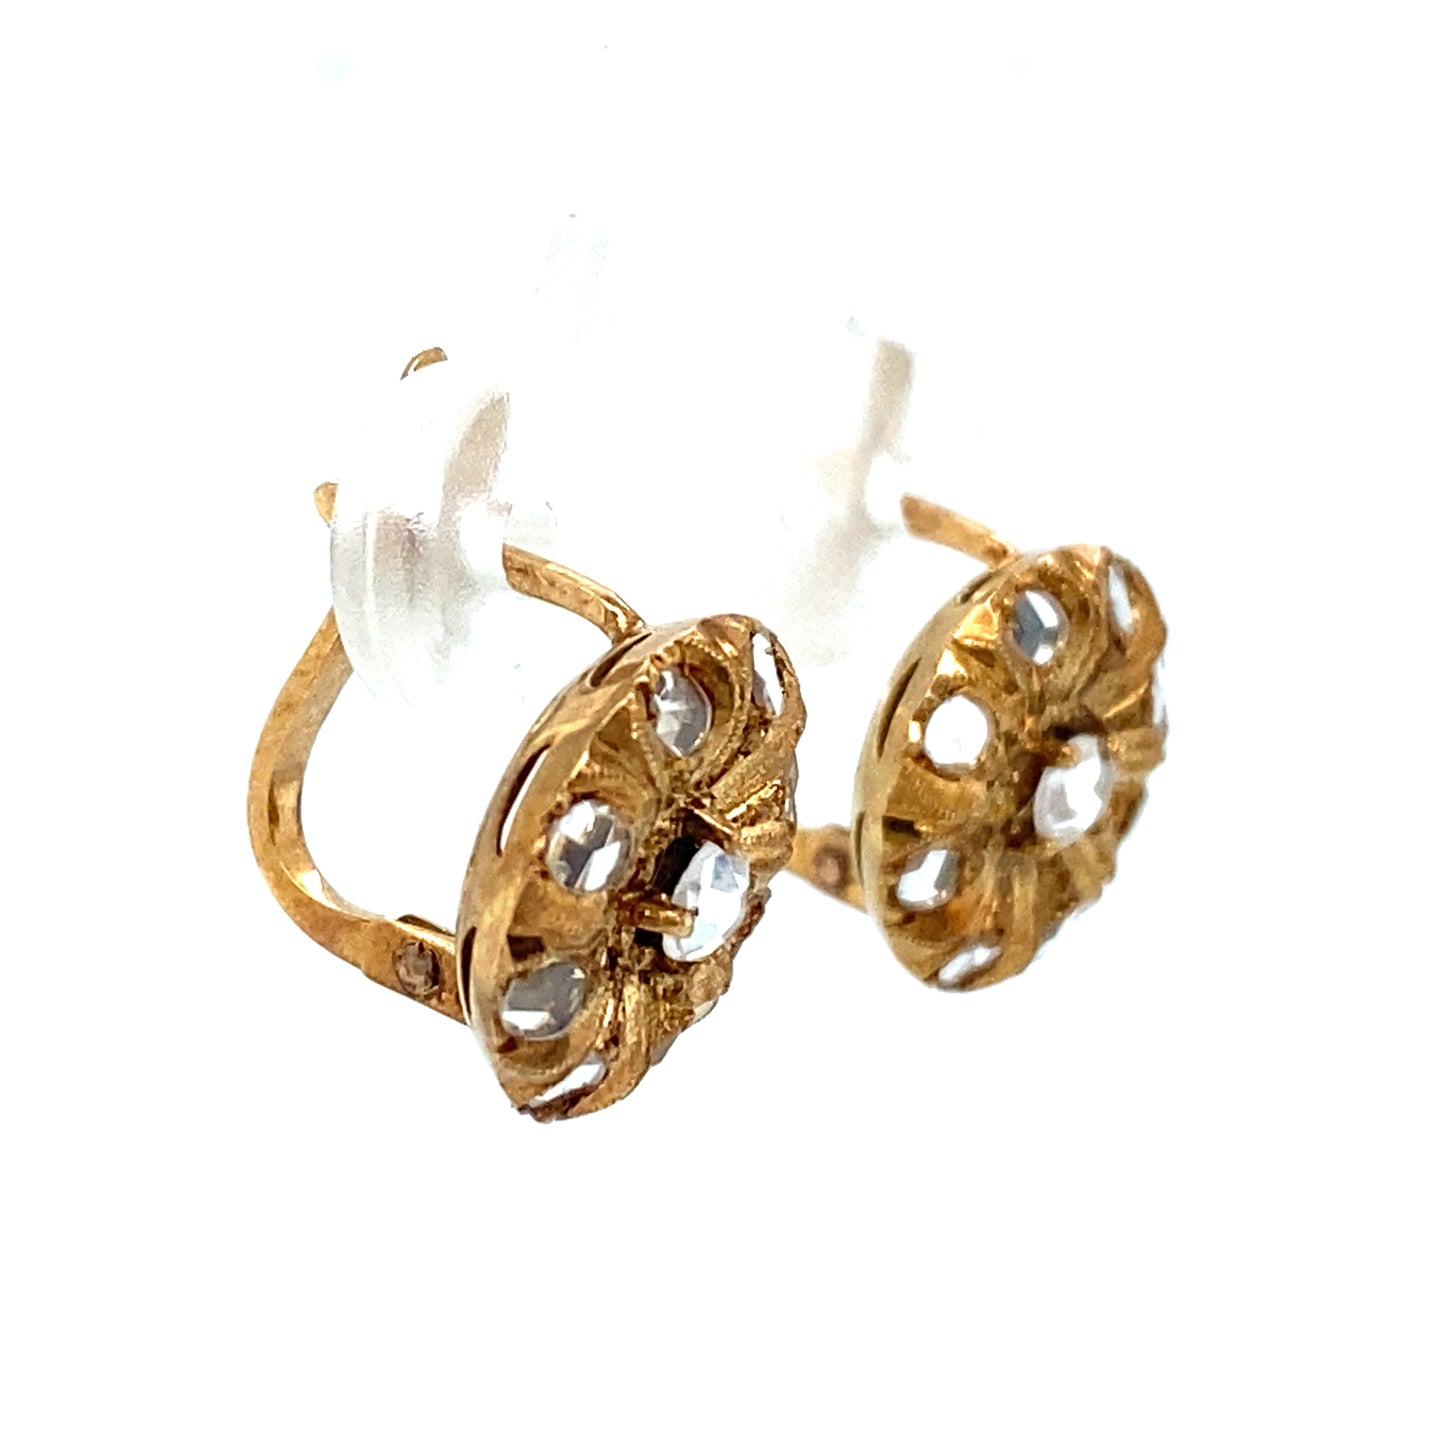 Circa 1930s Lever Back Rose Cut Diamond Dangle Earrings in 14K Gold